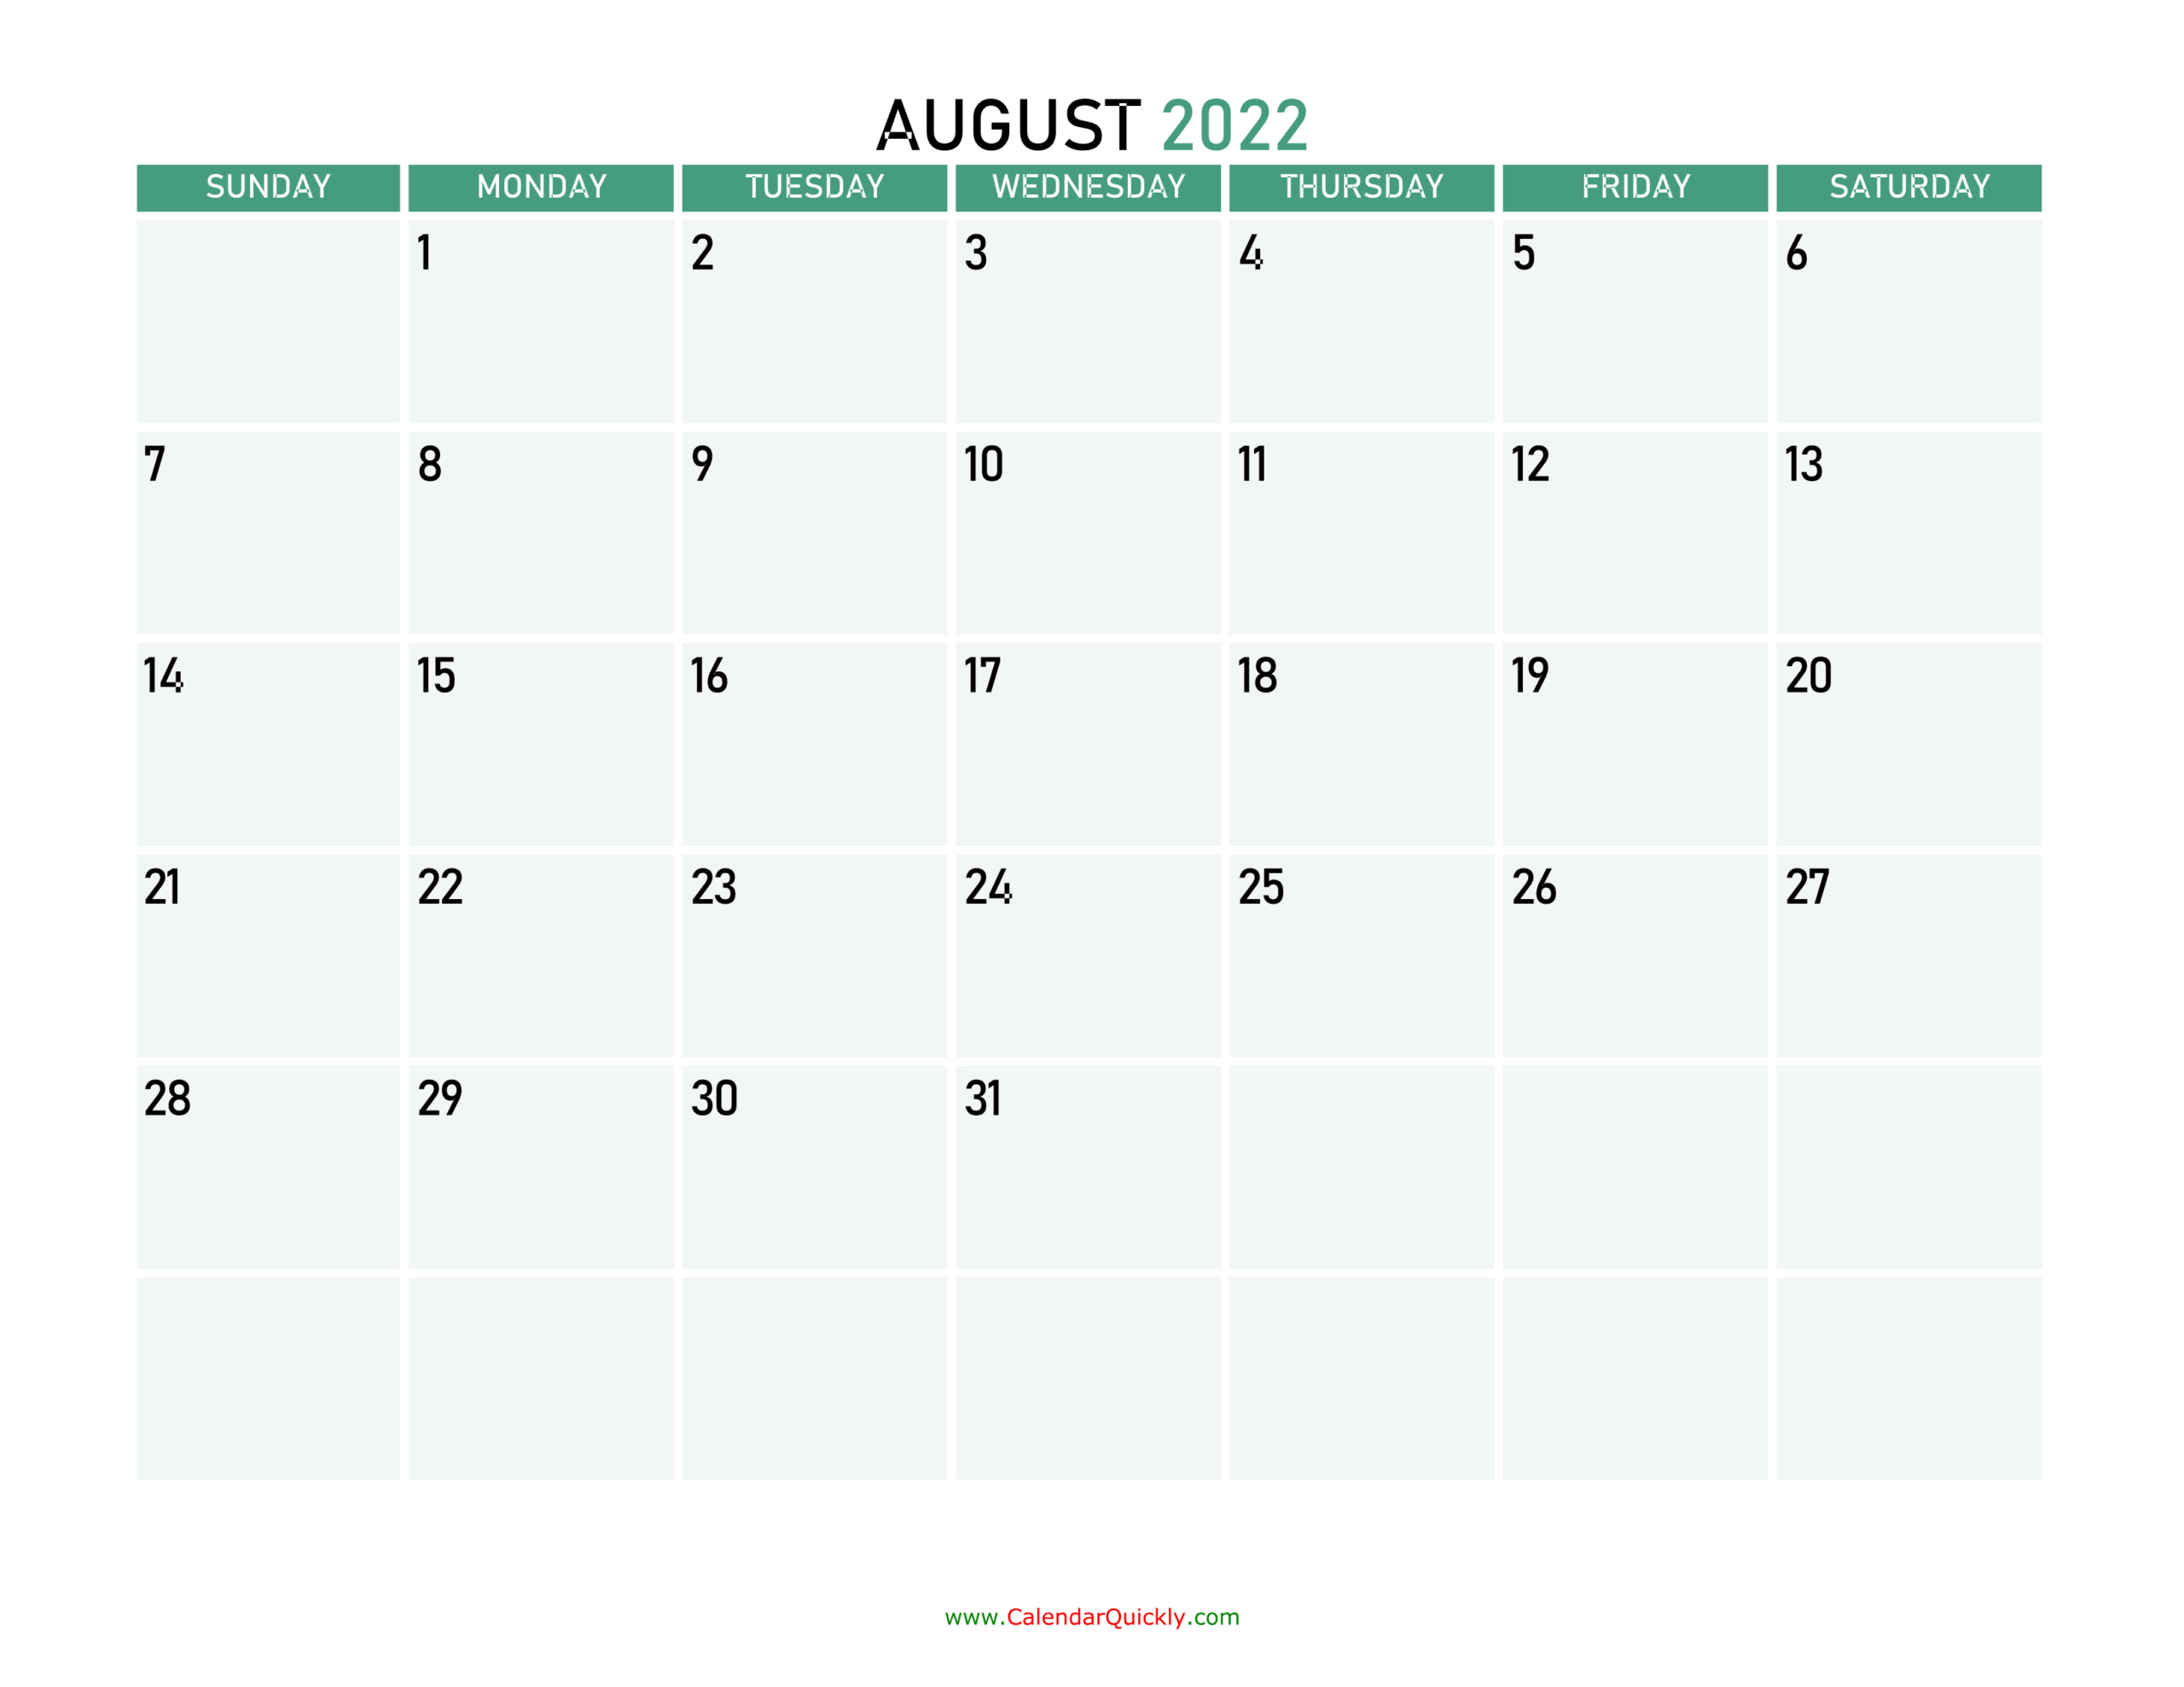 August 2022 Calendars | Calendar Quickly  2022 Calendar Printable August